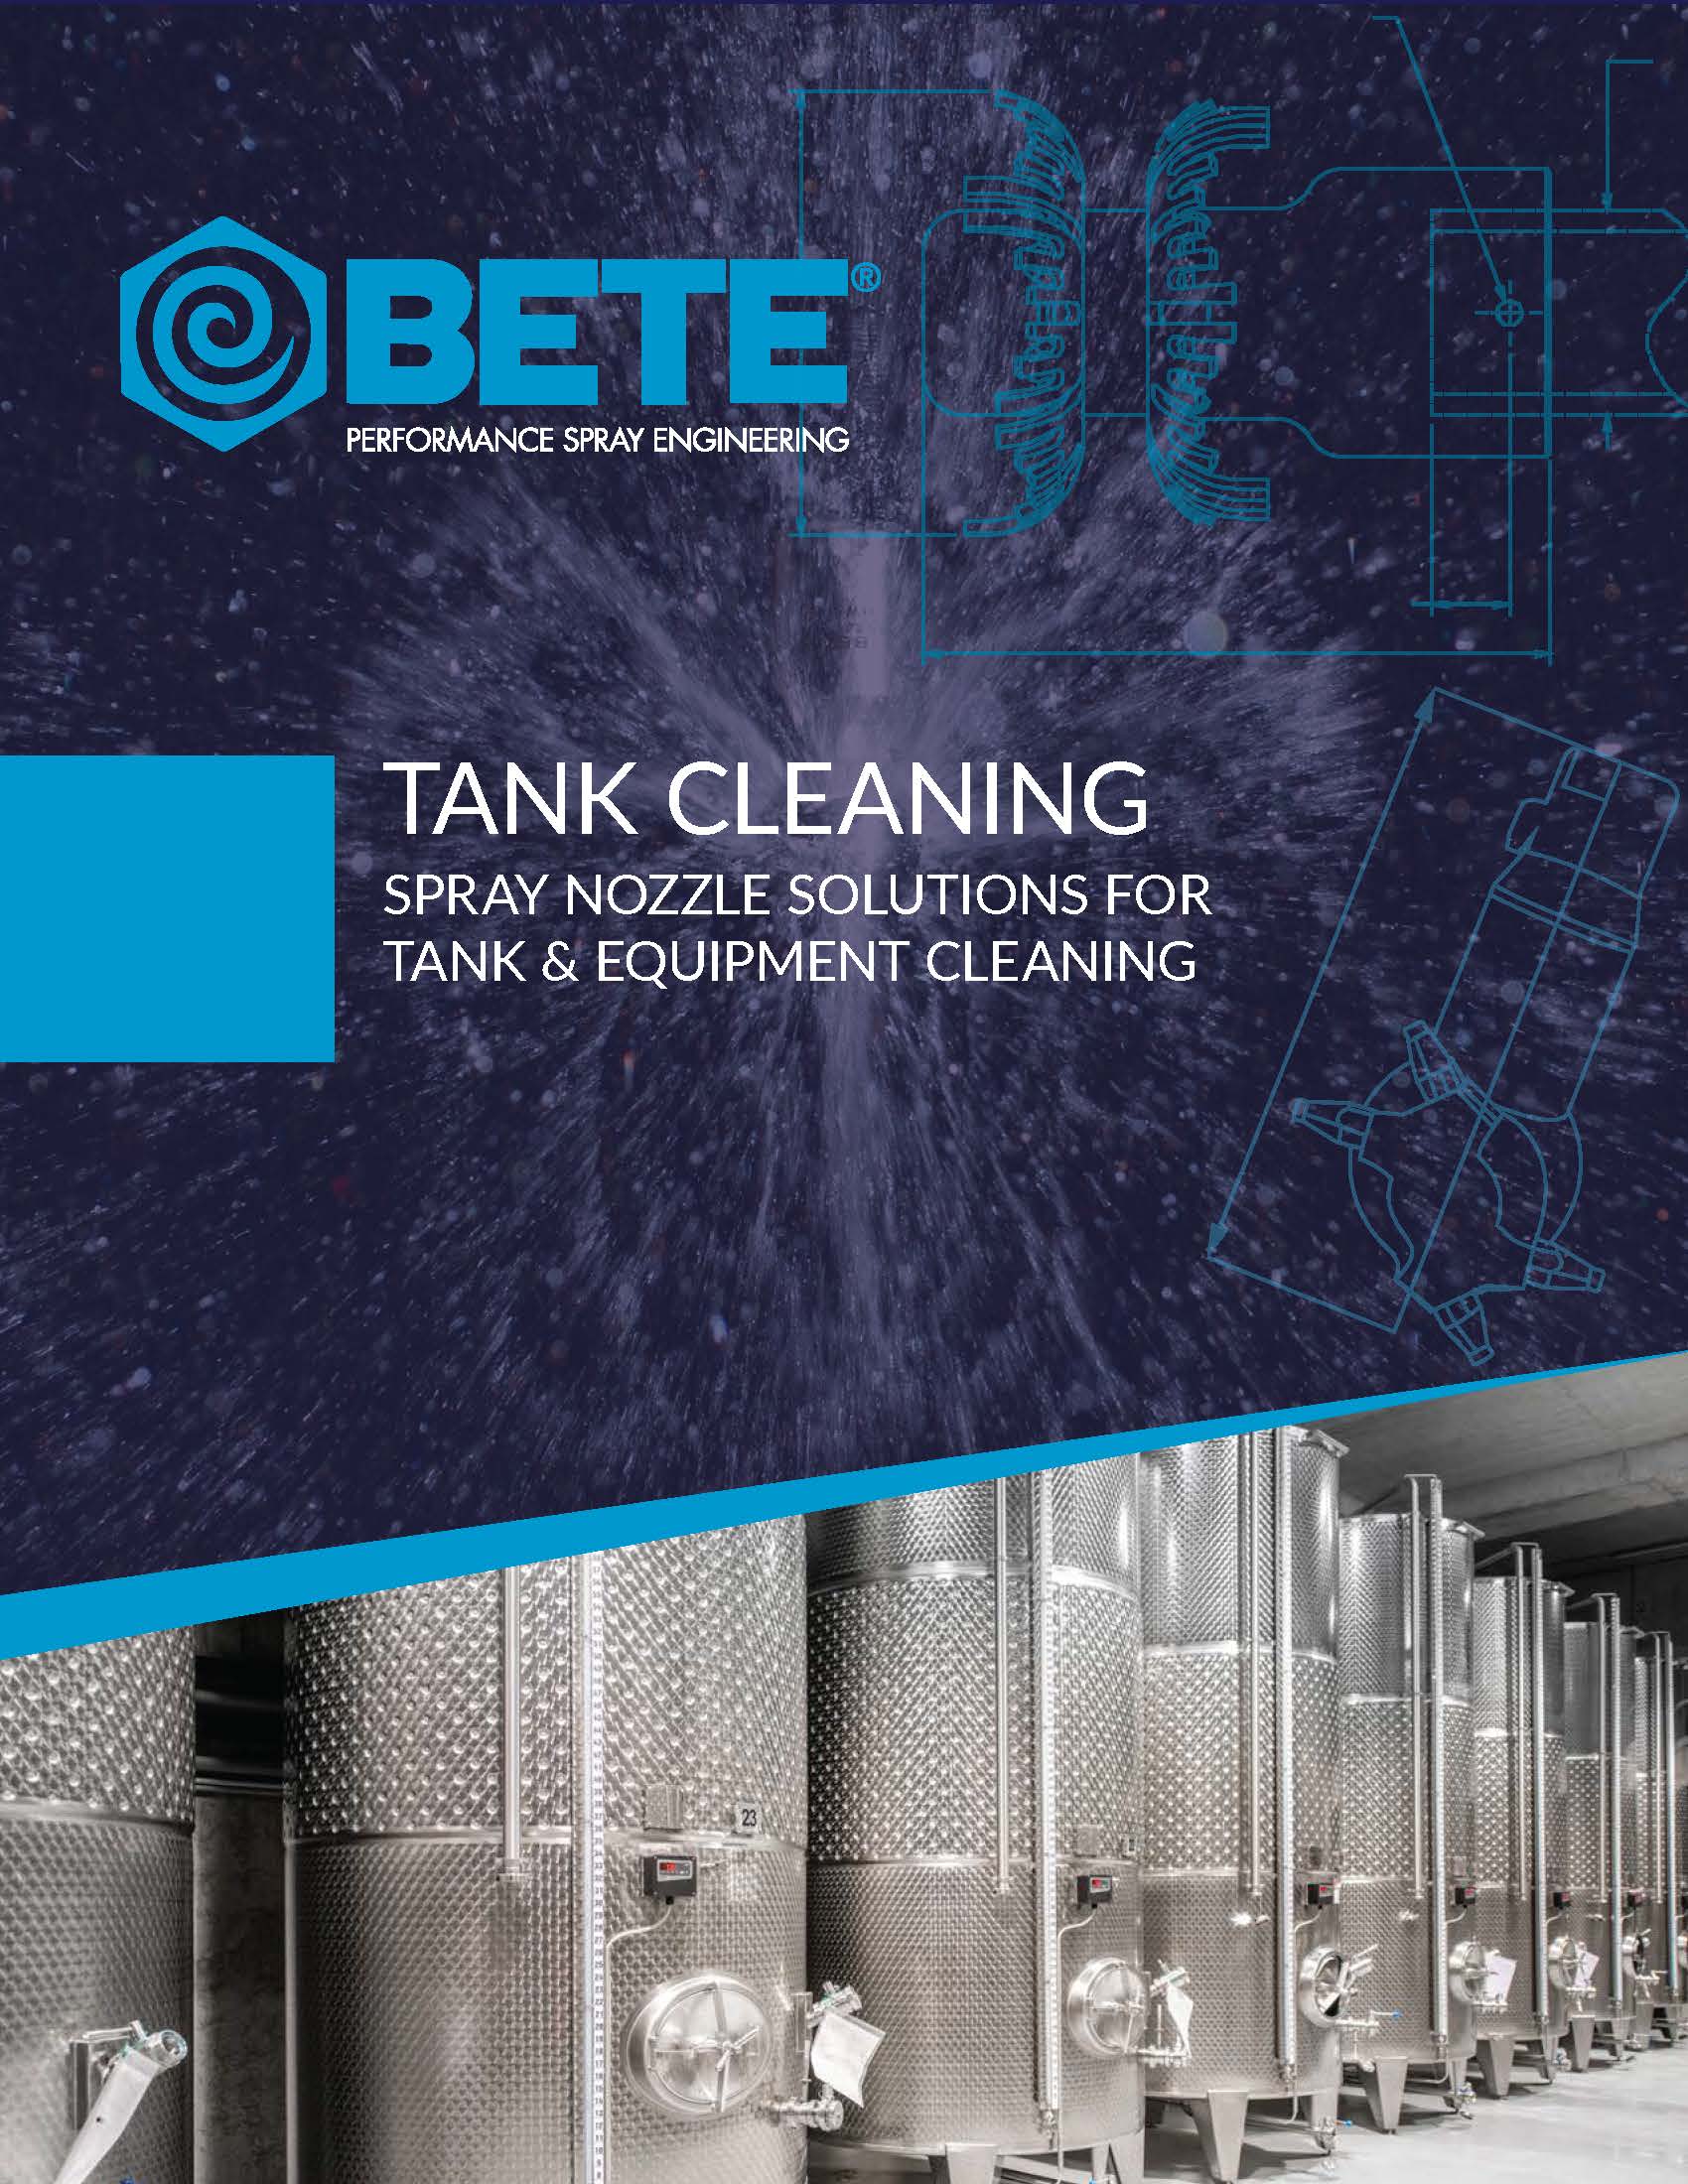 BETE Equipment & Tank Cleaning Brochure